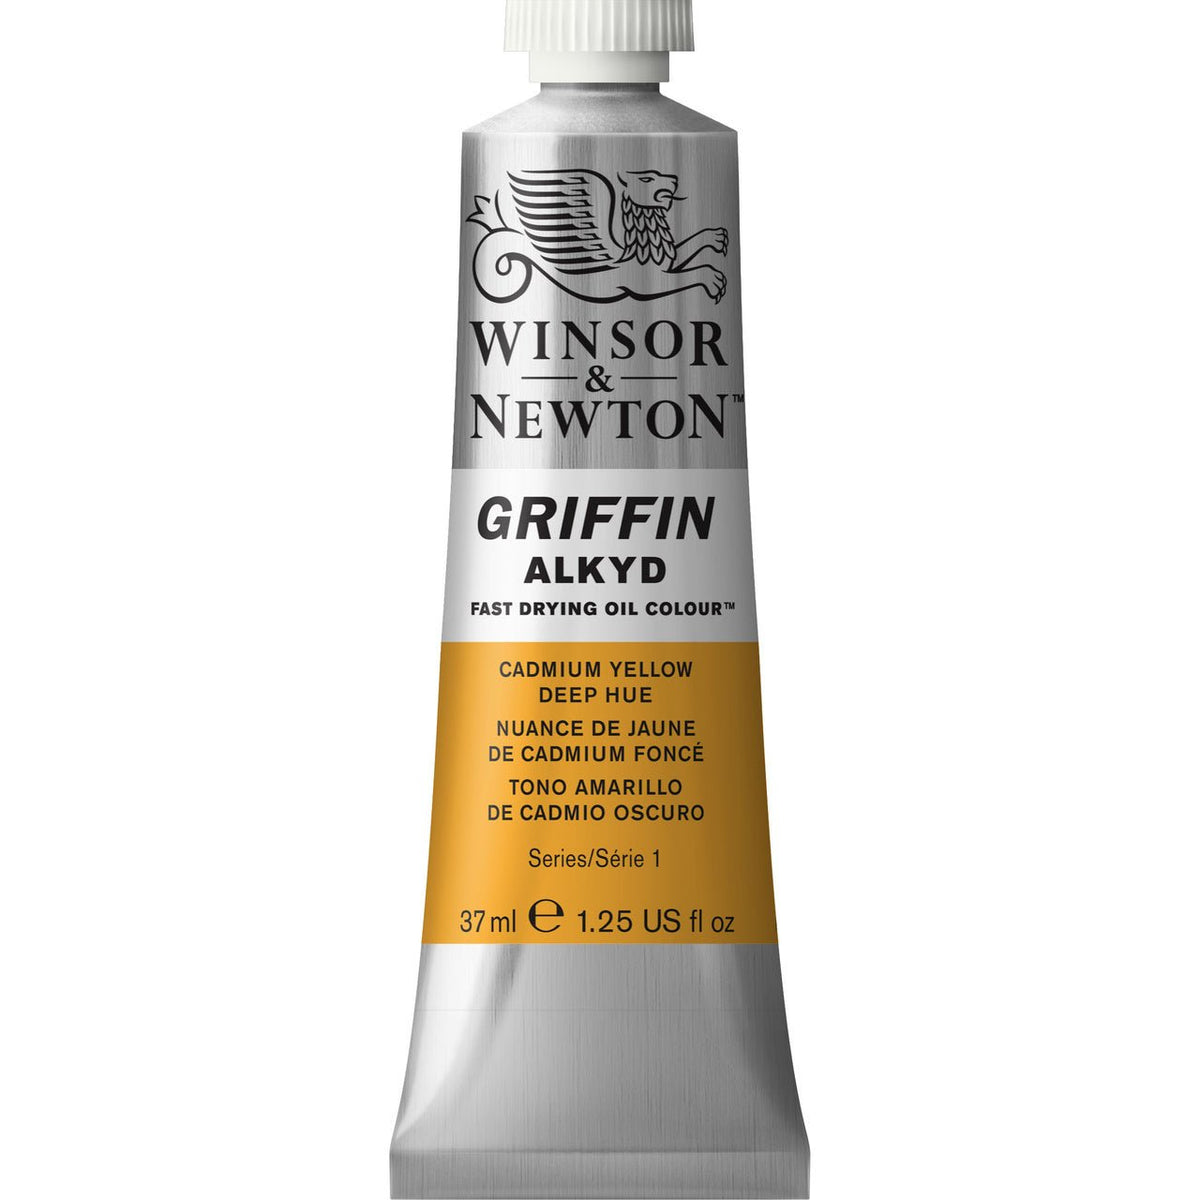 Winsor & Newton Griffin Alkyd 37ml Cadmium Yellow Deep Hue - merriartist.com